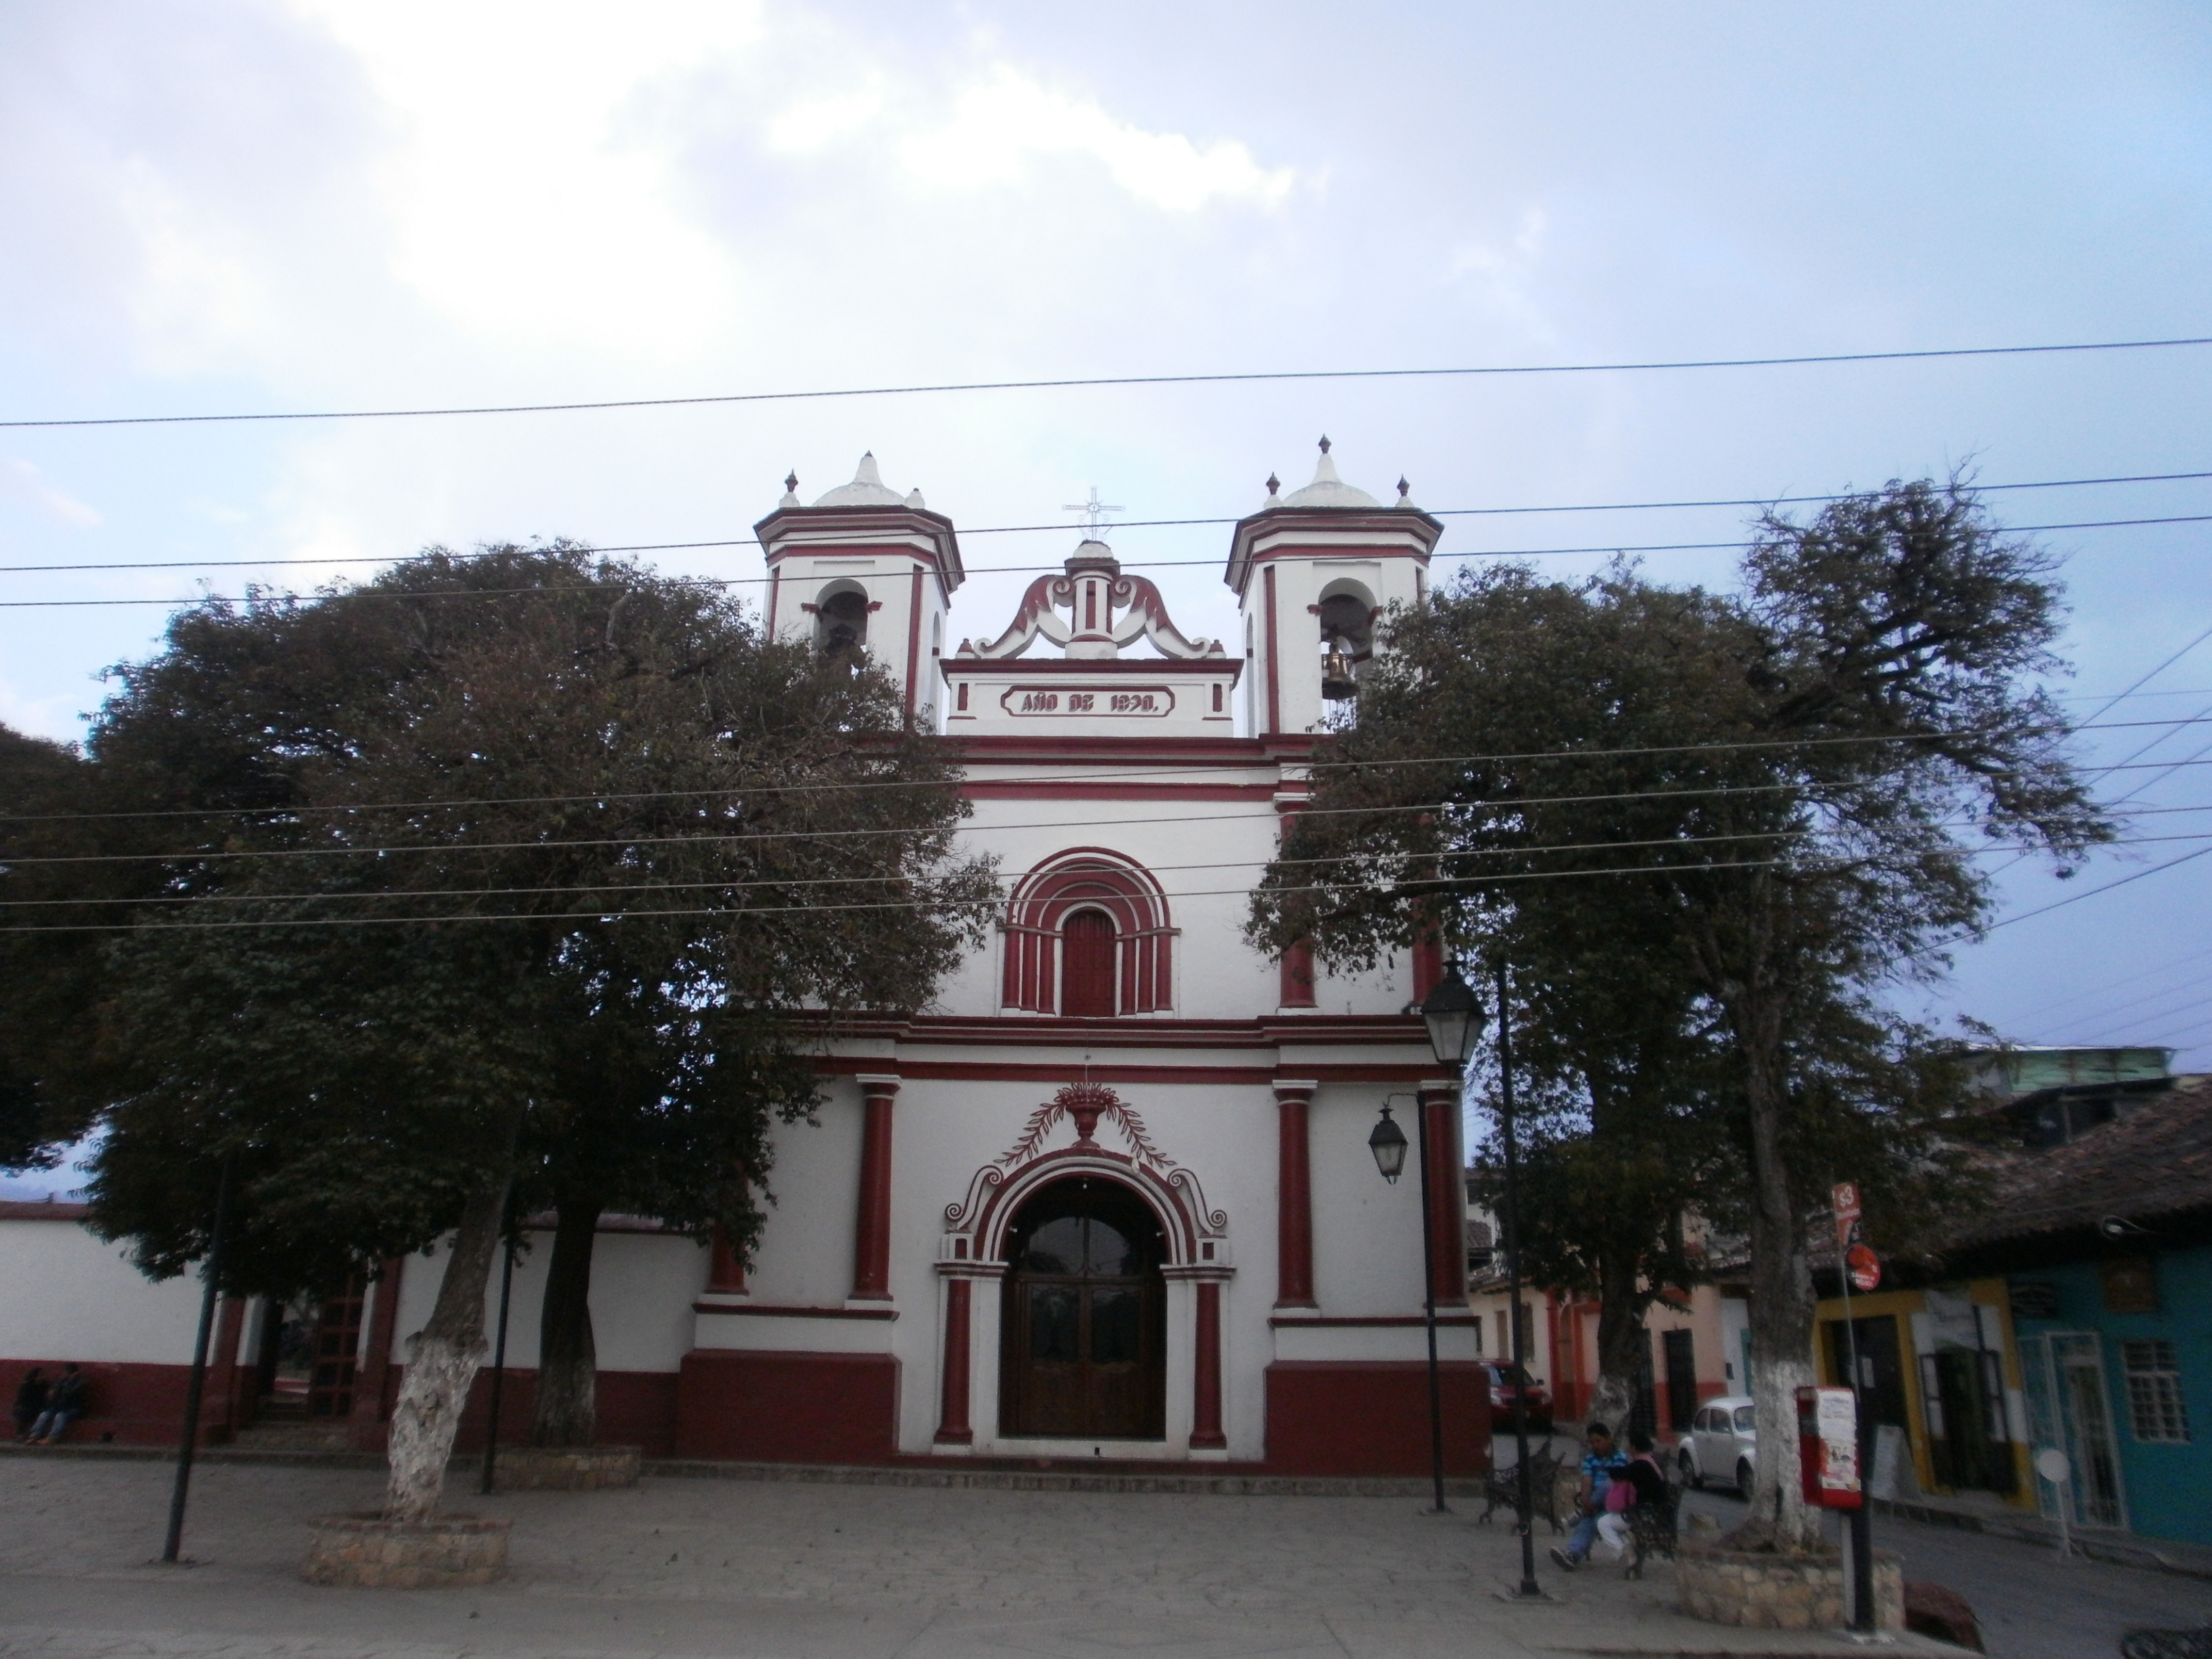 Plaza del Cerrillo - San Cristobal de las Casas